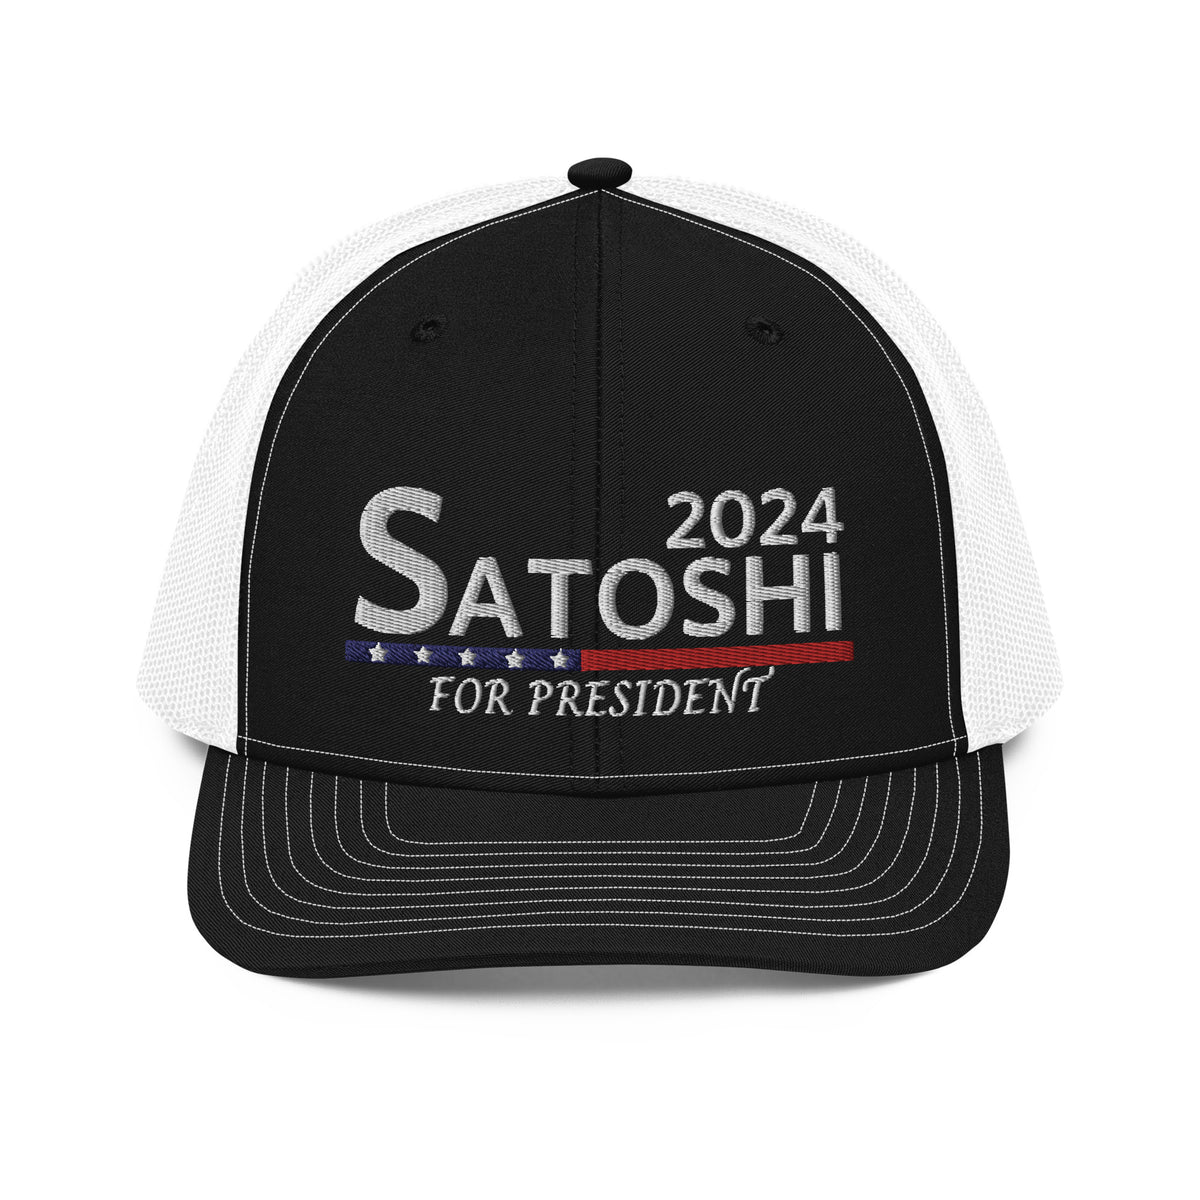 Satoshi For President 2024 (White Lettering) Bitcoin Trucker Hat - fomo21